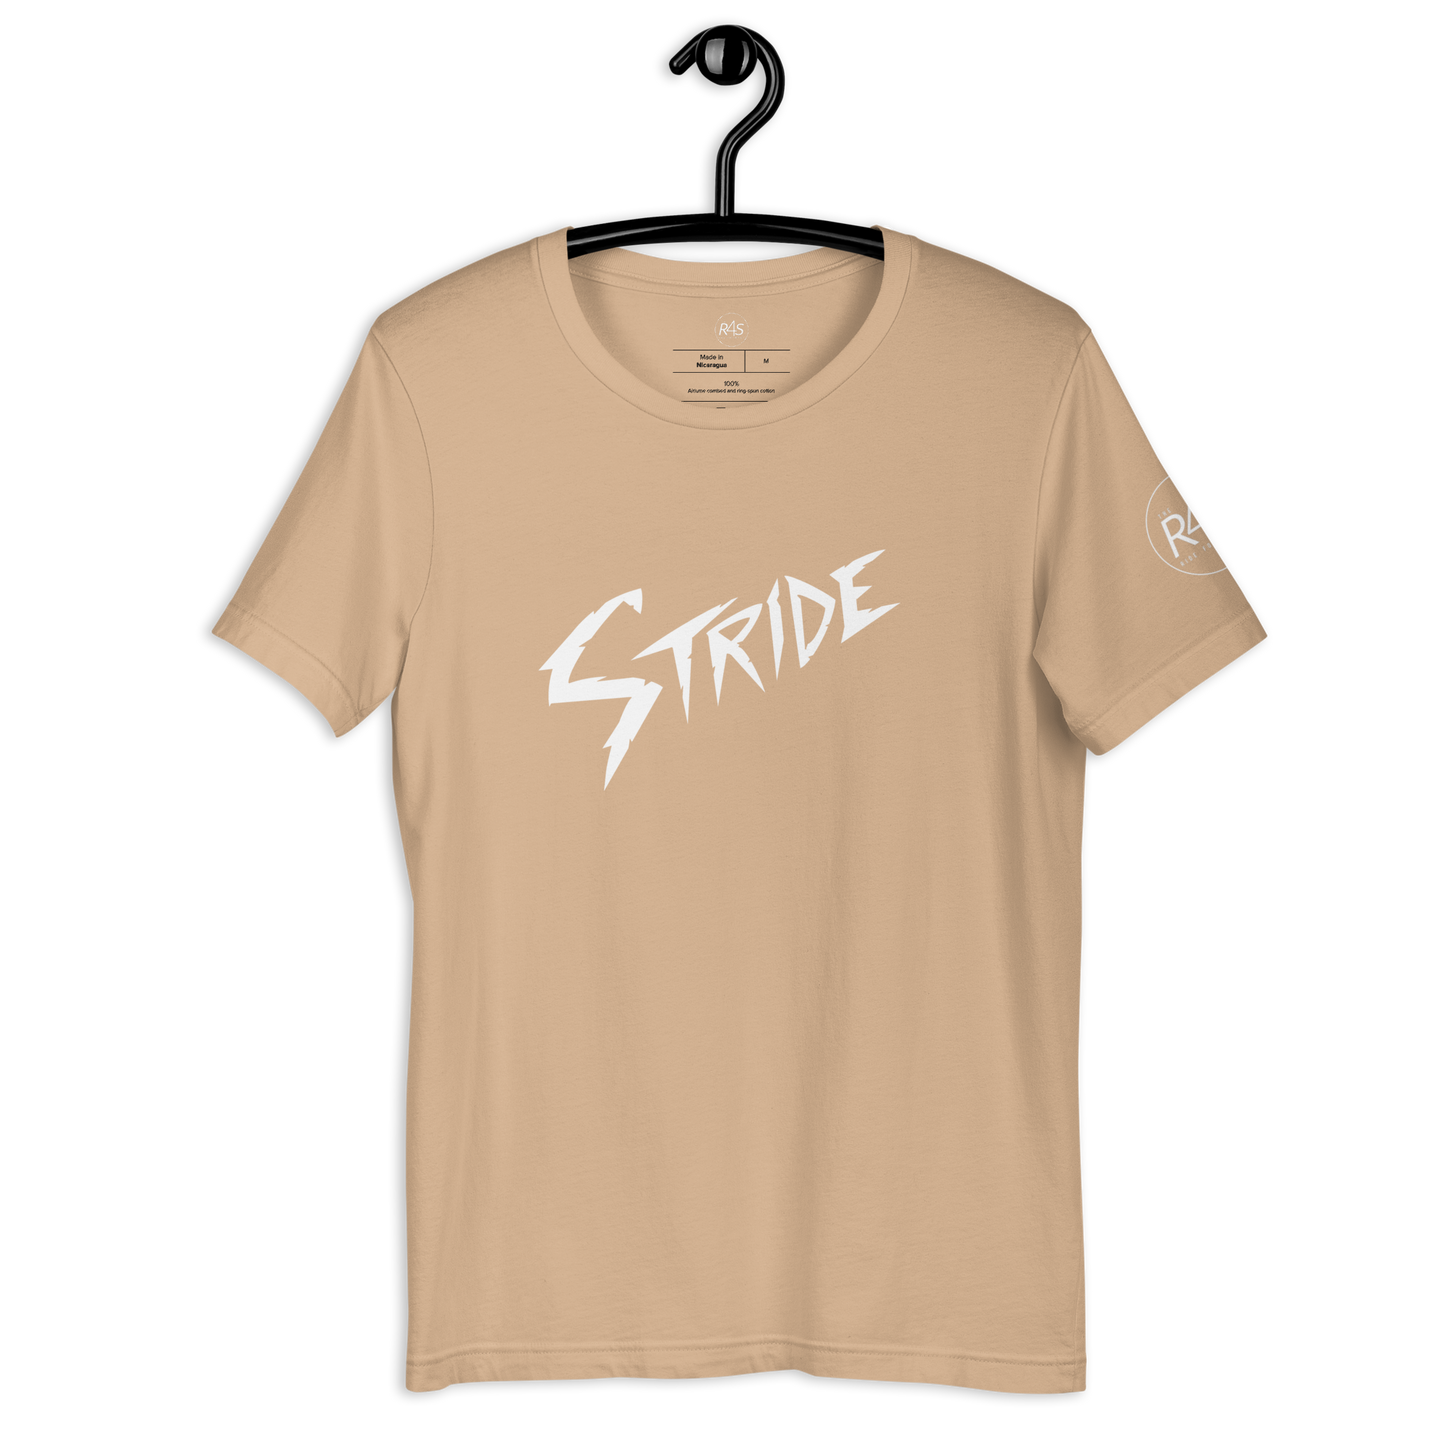 Stride Short-sleeve unisex t-shirt